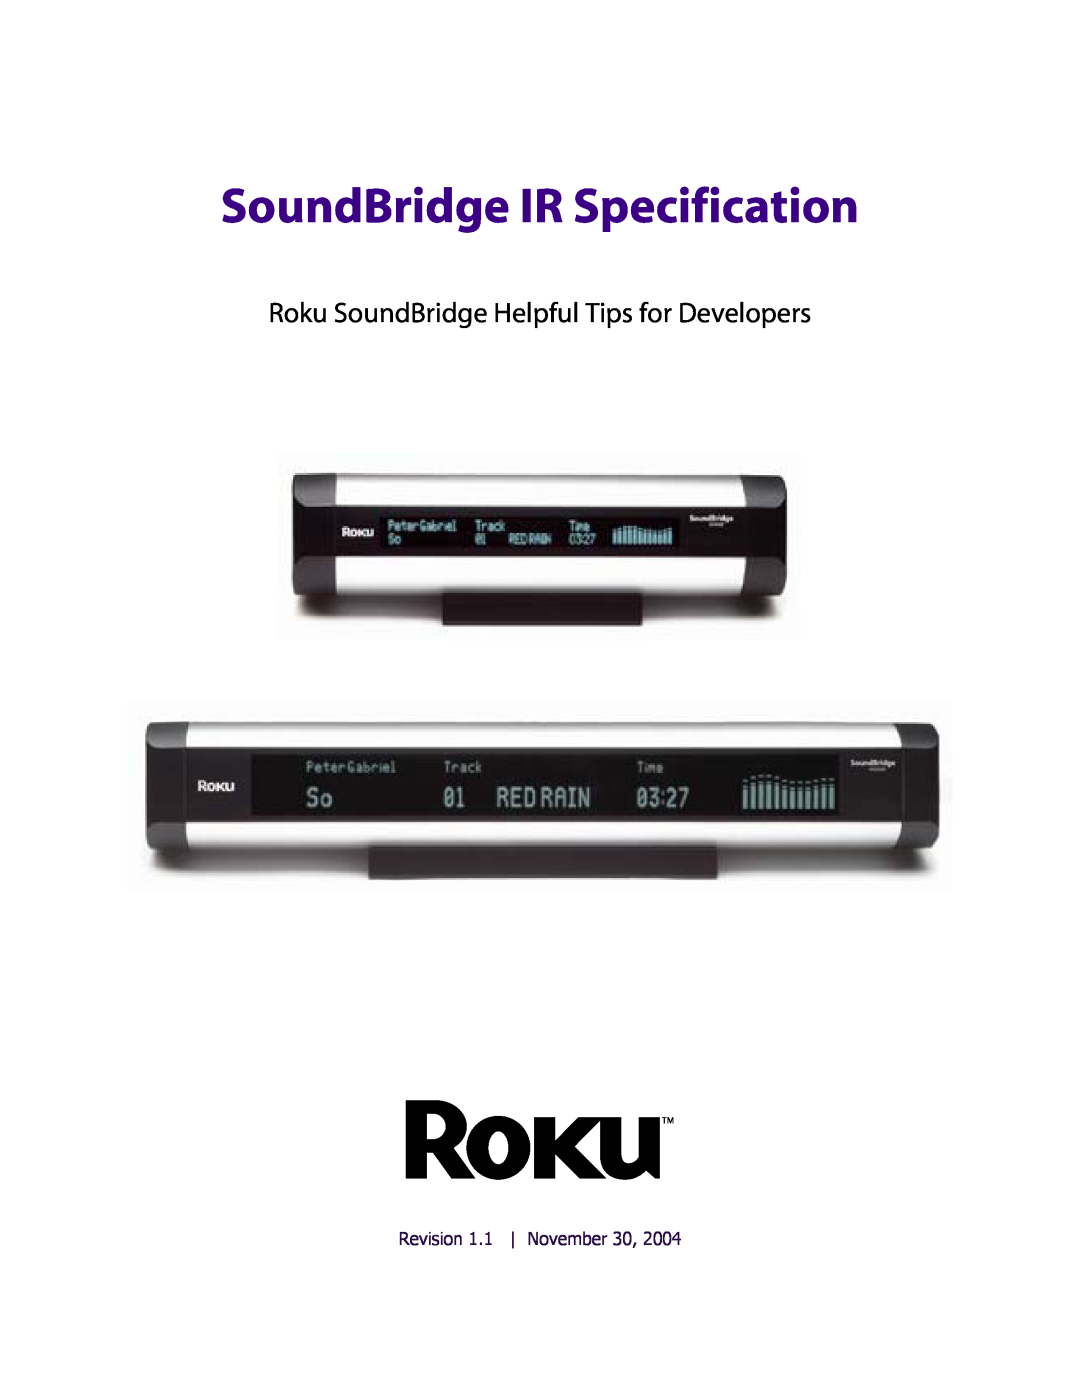 Roku M1000, M2000 manual SoundBridge IR Specification, Roku SoundBridge Helpful Tips for Developers, Revision 1.1 November 